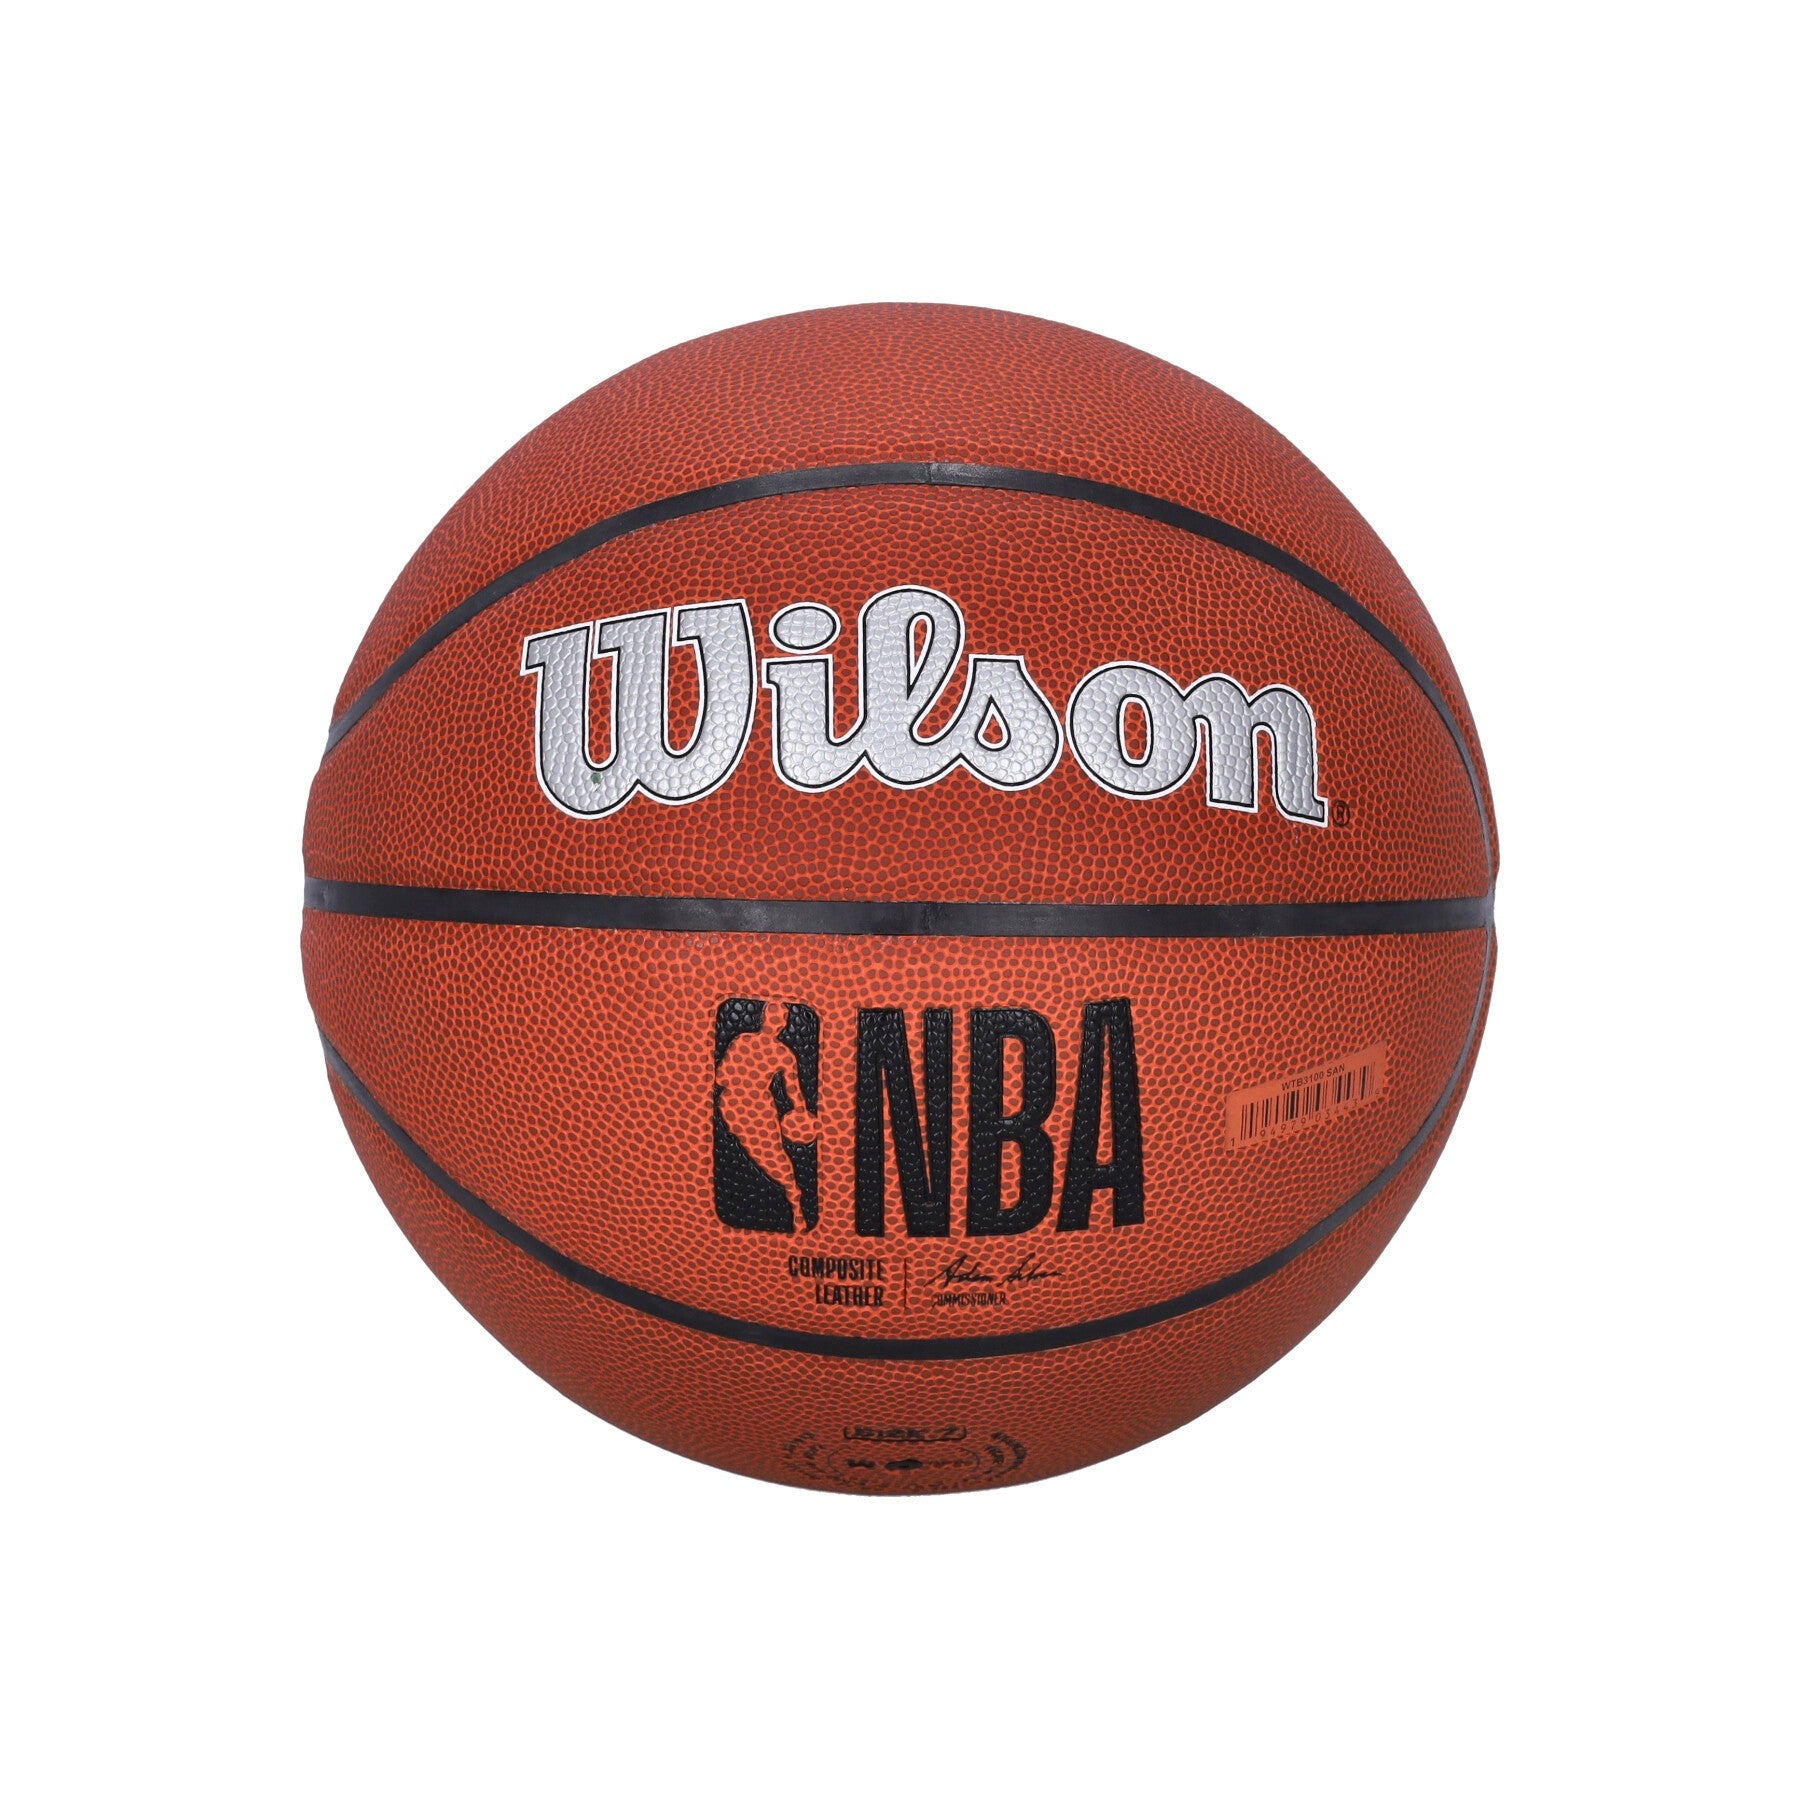 Herren NBA Team Alliance Basketball Größe 7 Saaspu Original Teamfarben